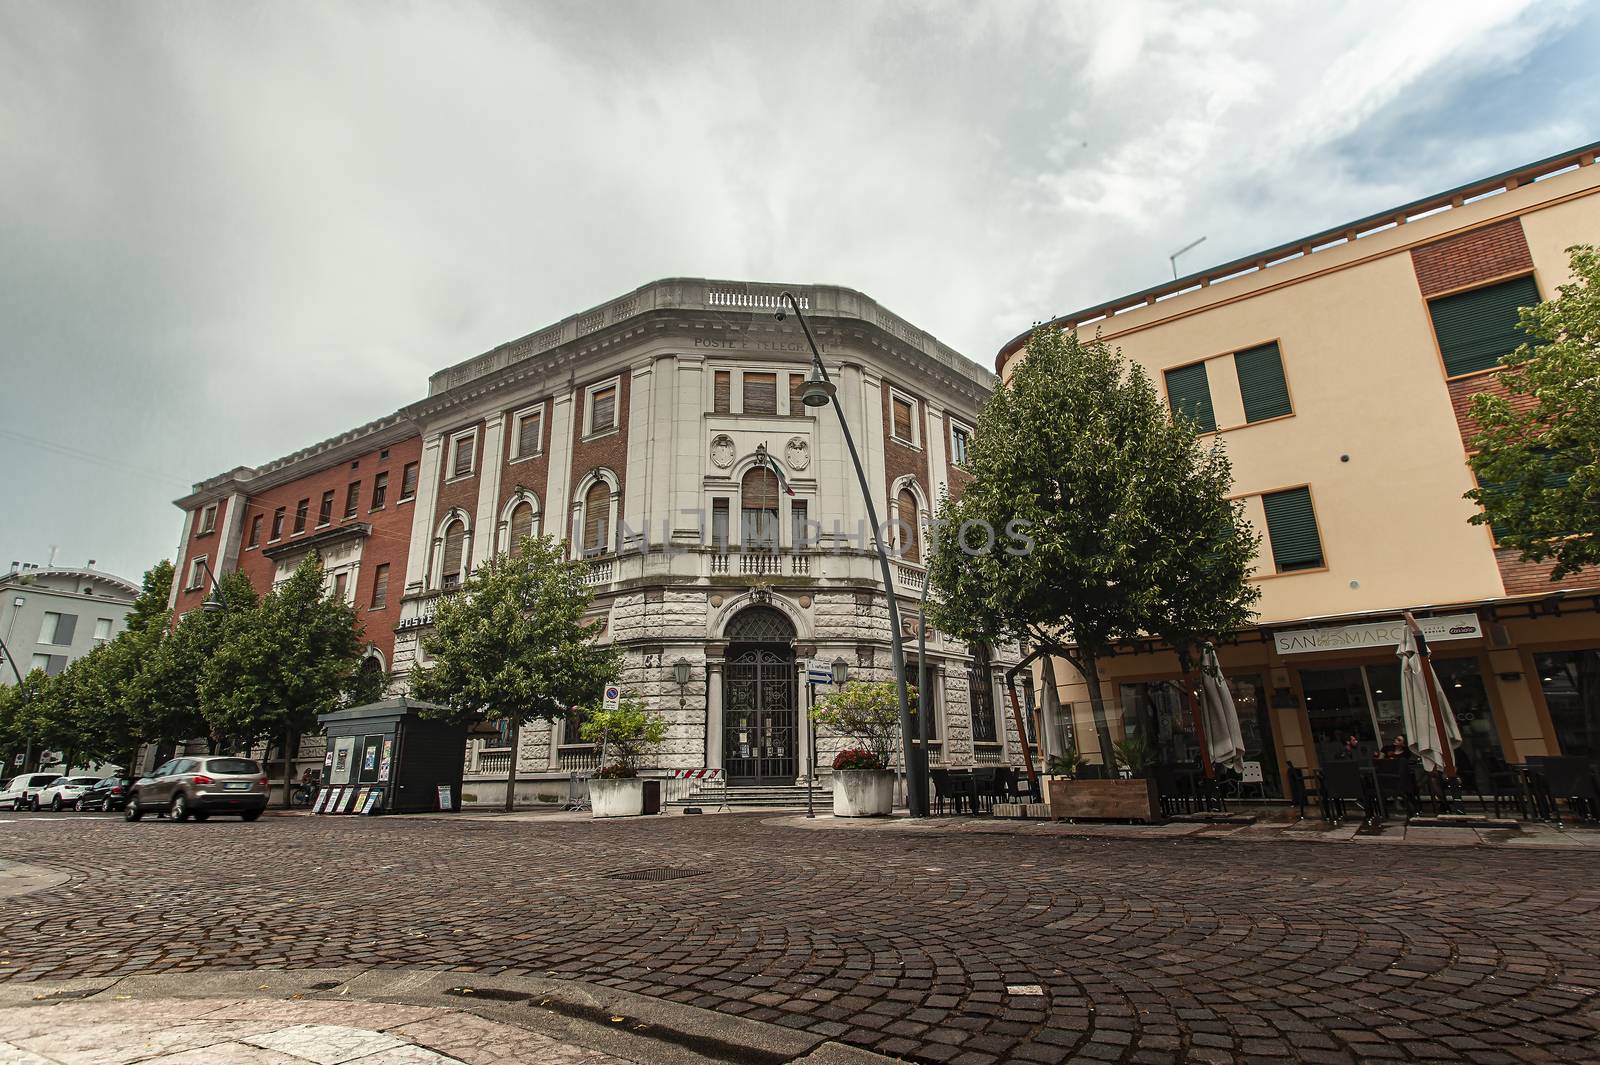 ROVIGO, ITALY 17 JULY 2020: Corso del Popolo in Rovigo, the principal street in the Italian city